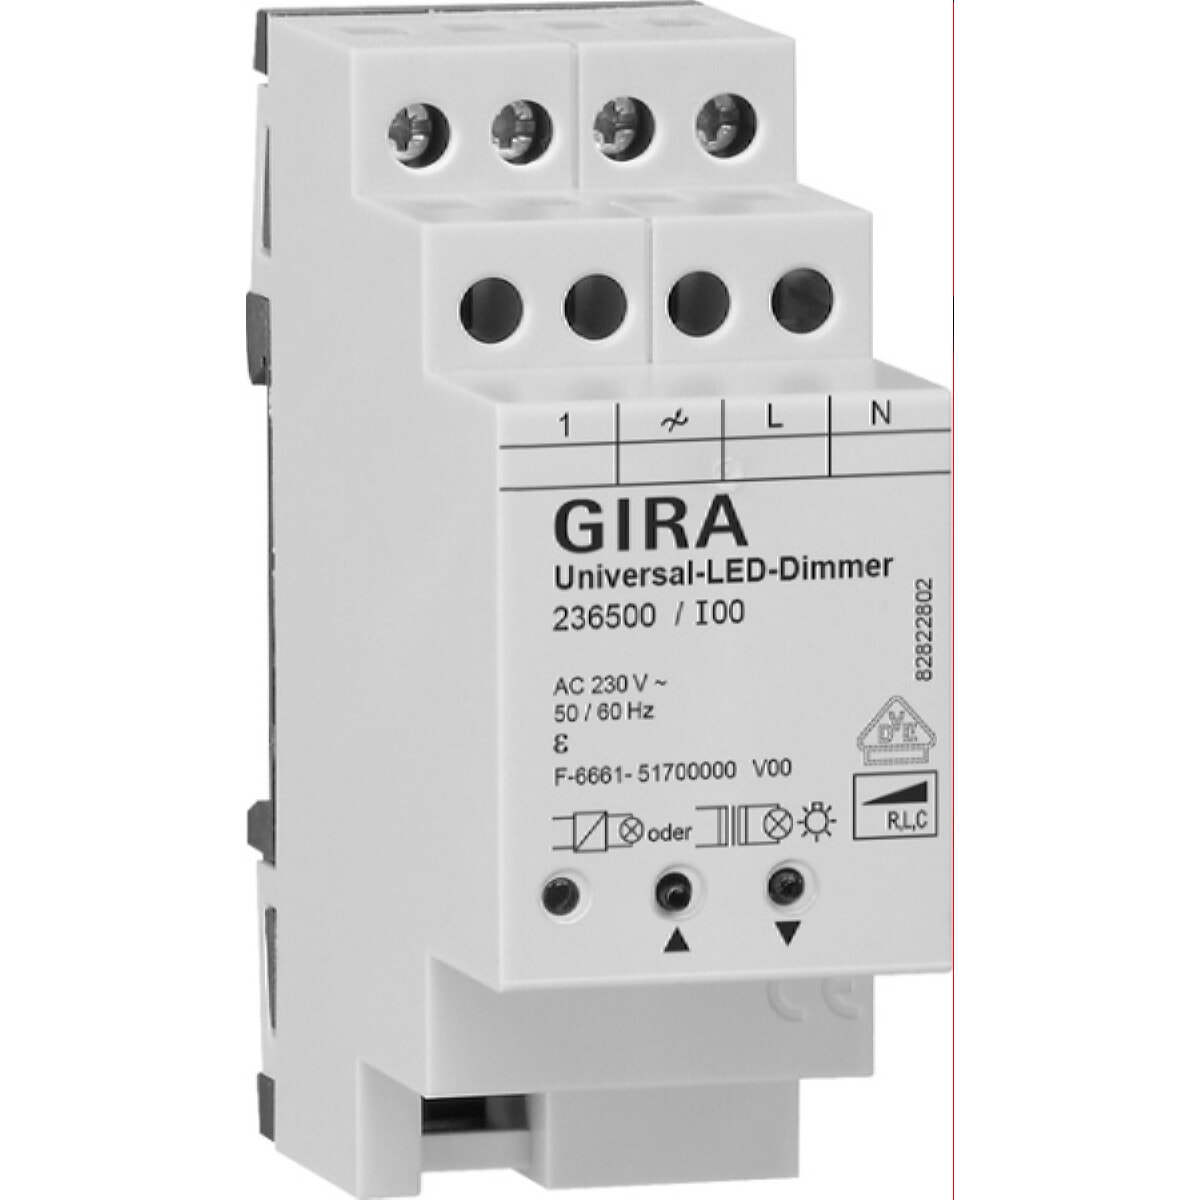 Gira dimmer 236500 S3000 REG electronics 236500